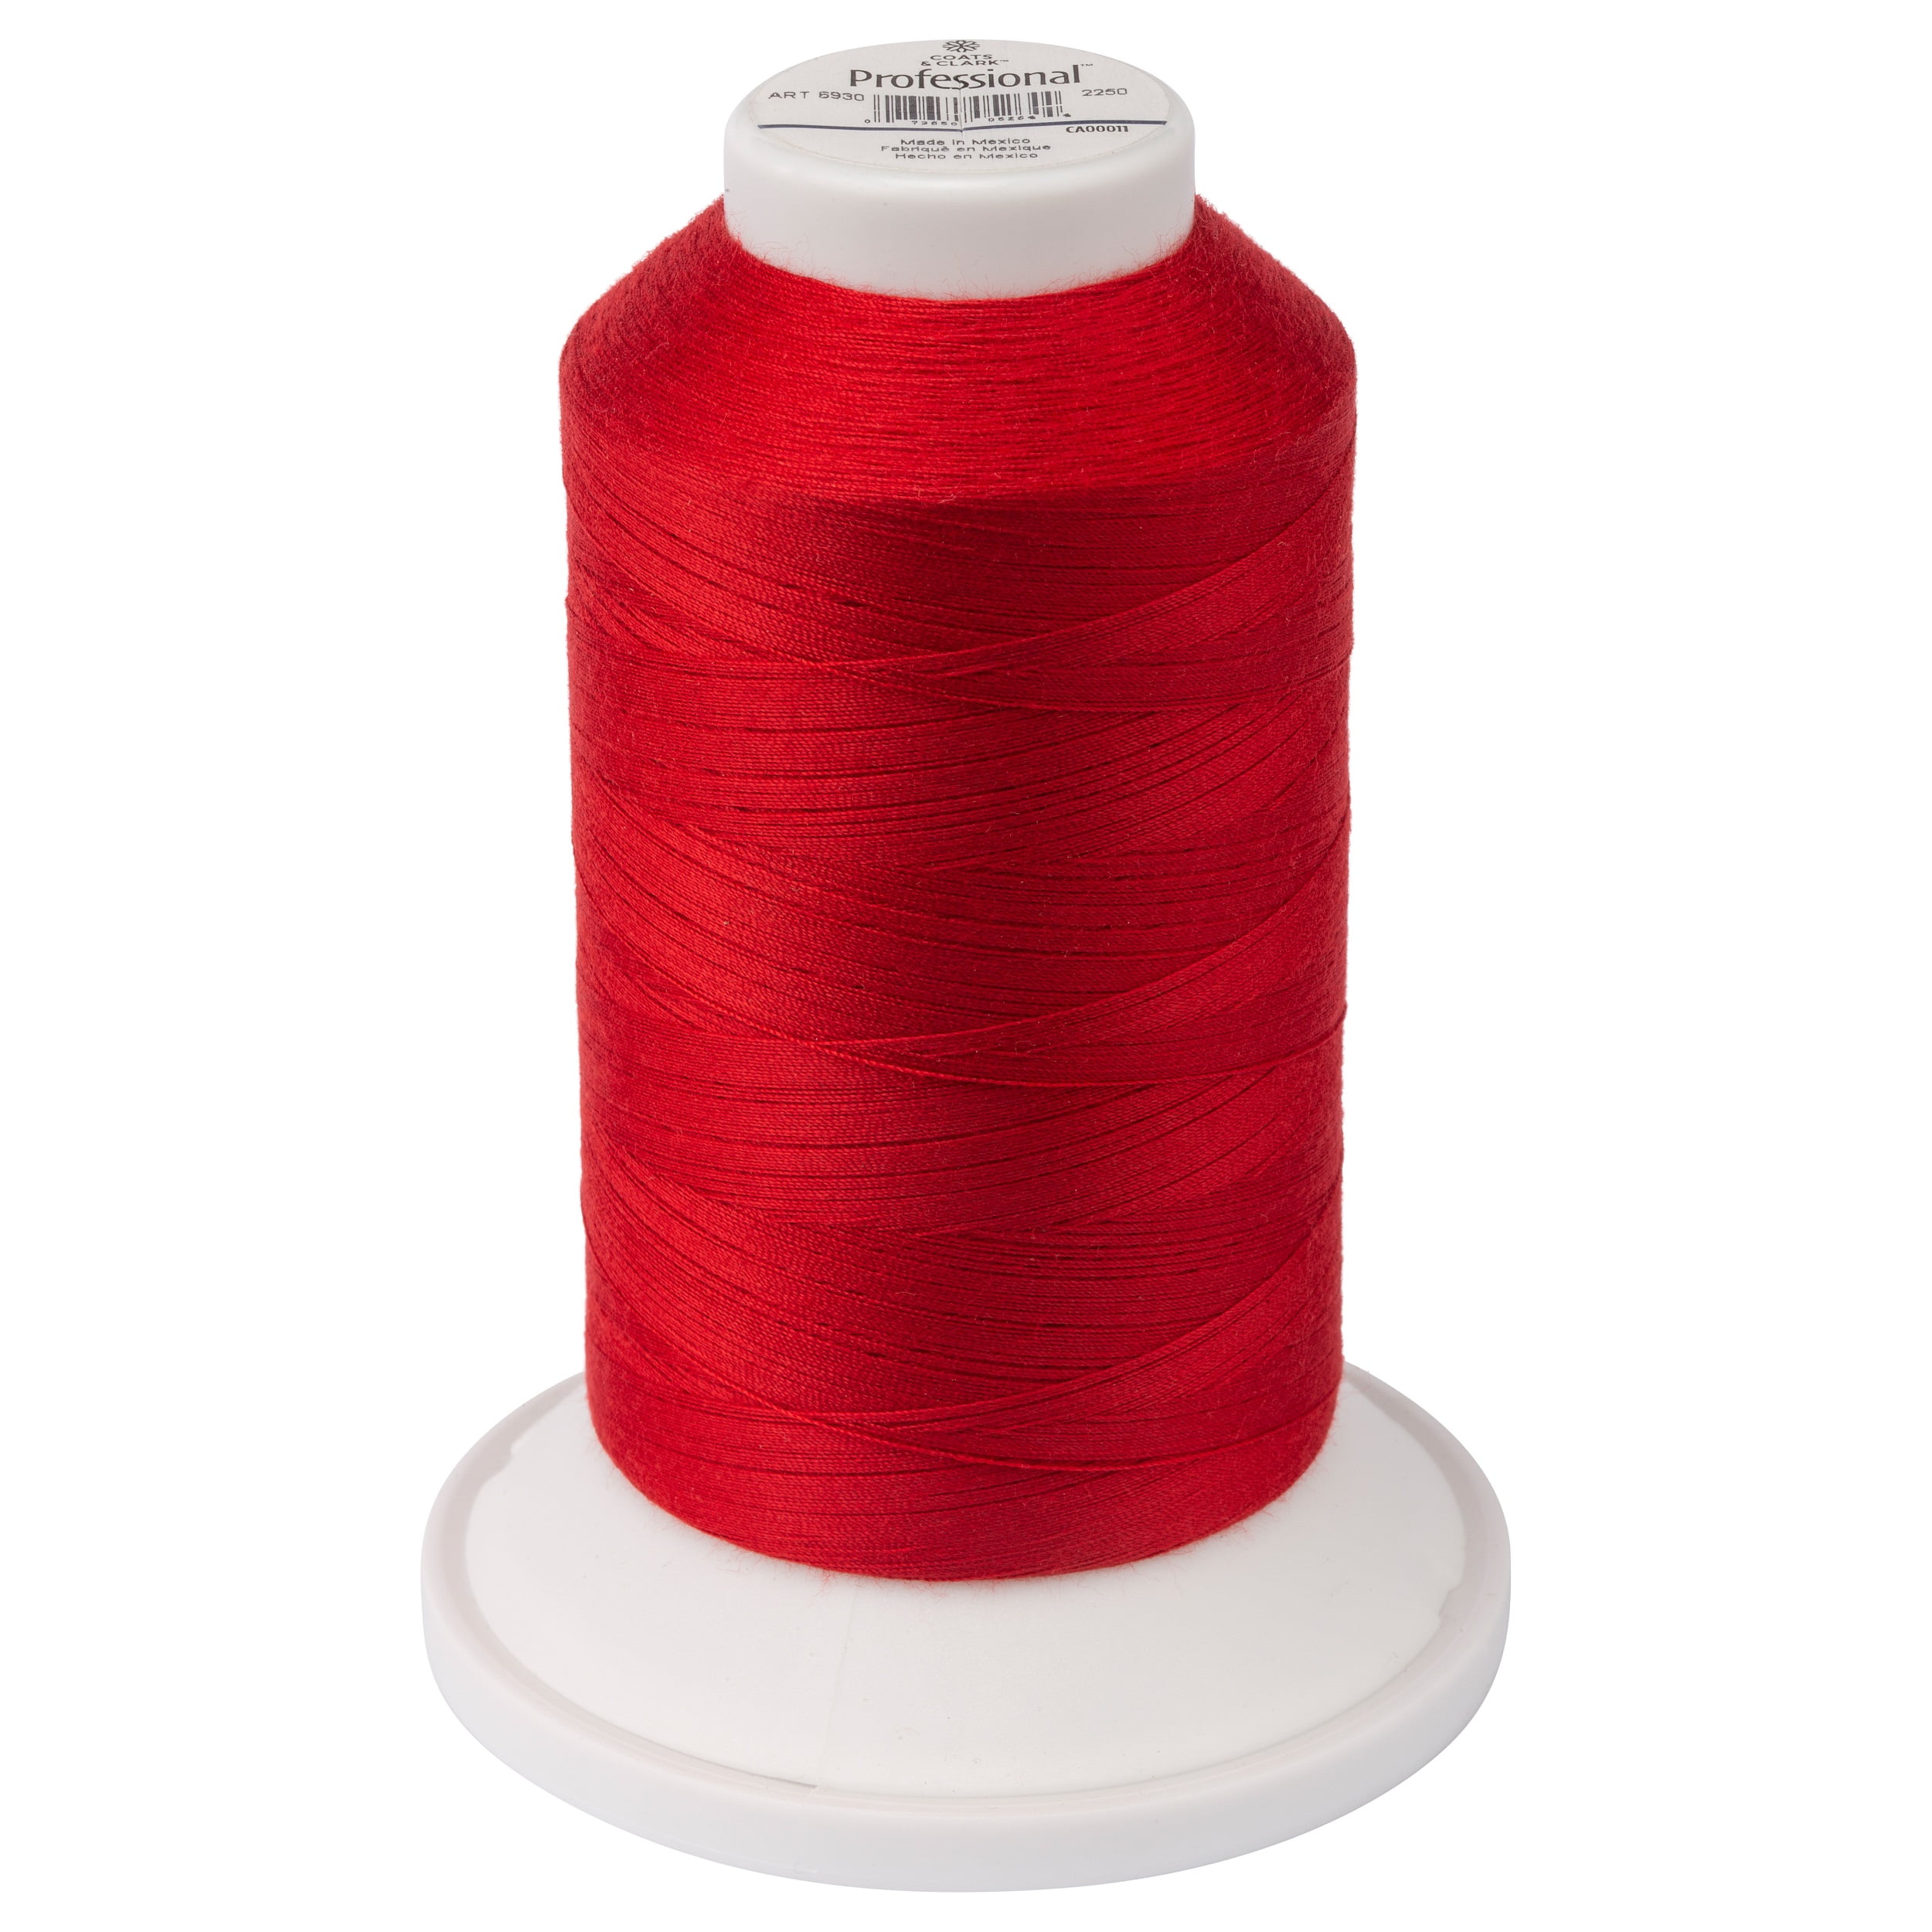 Polyester Embroidery Thread, Hobby Lobby, 1253673